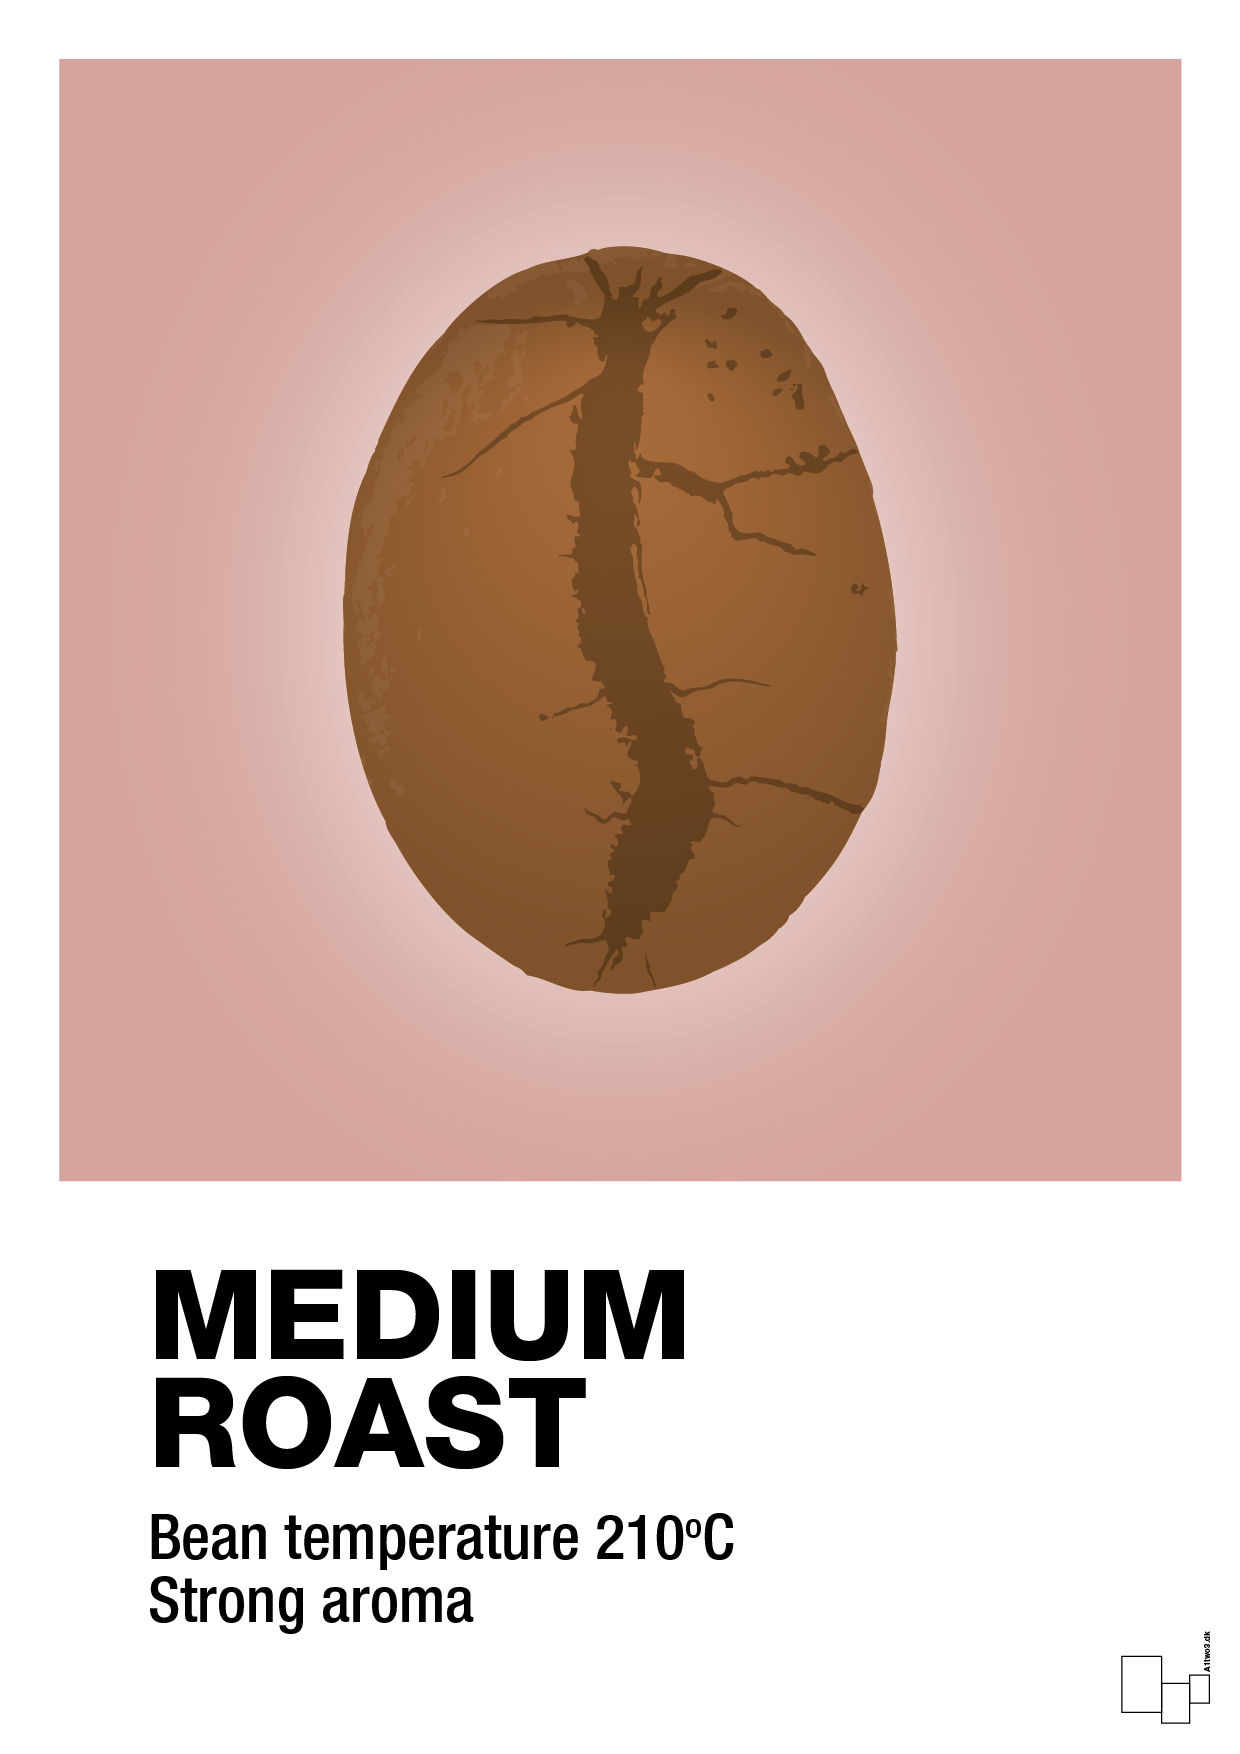 medium roast - Plakat med Mad & Drikke i Bubble Shell